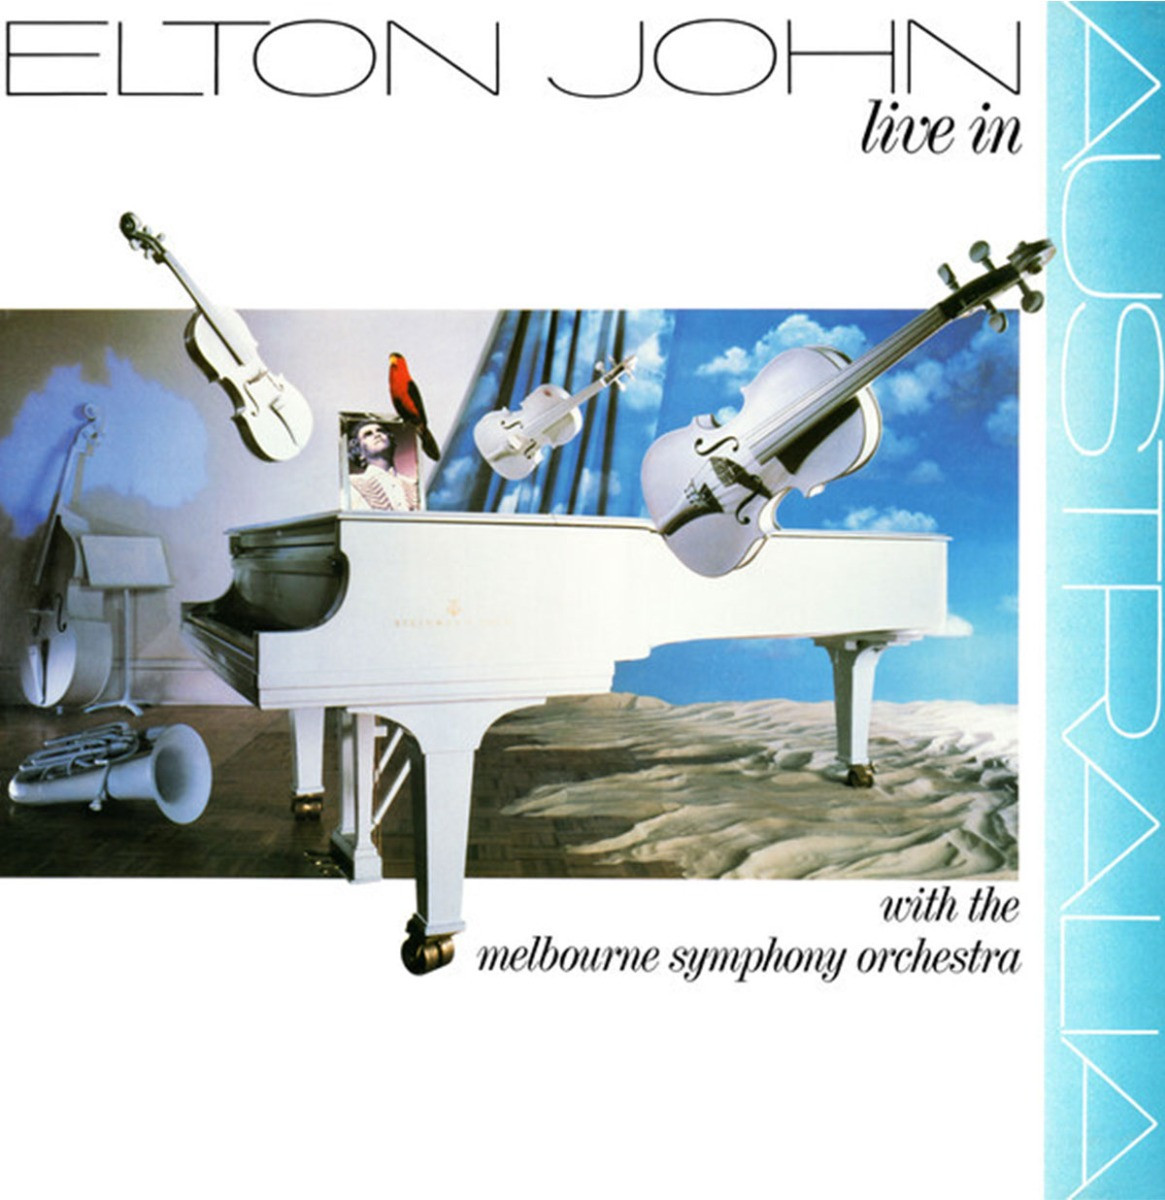 Elton John - Live In Australia (With The Melbourne Symphony Orchestra) 2LP